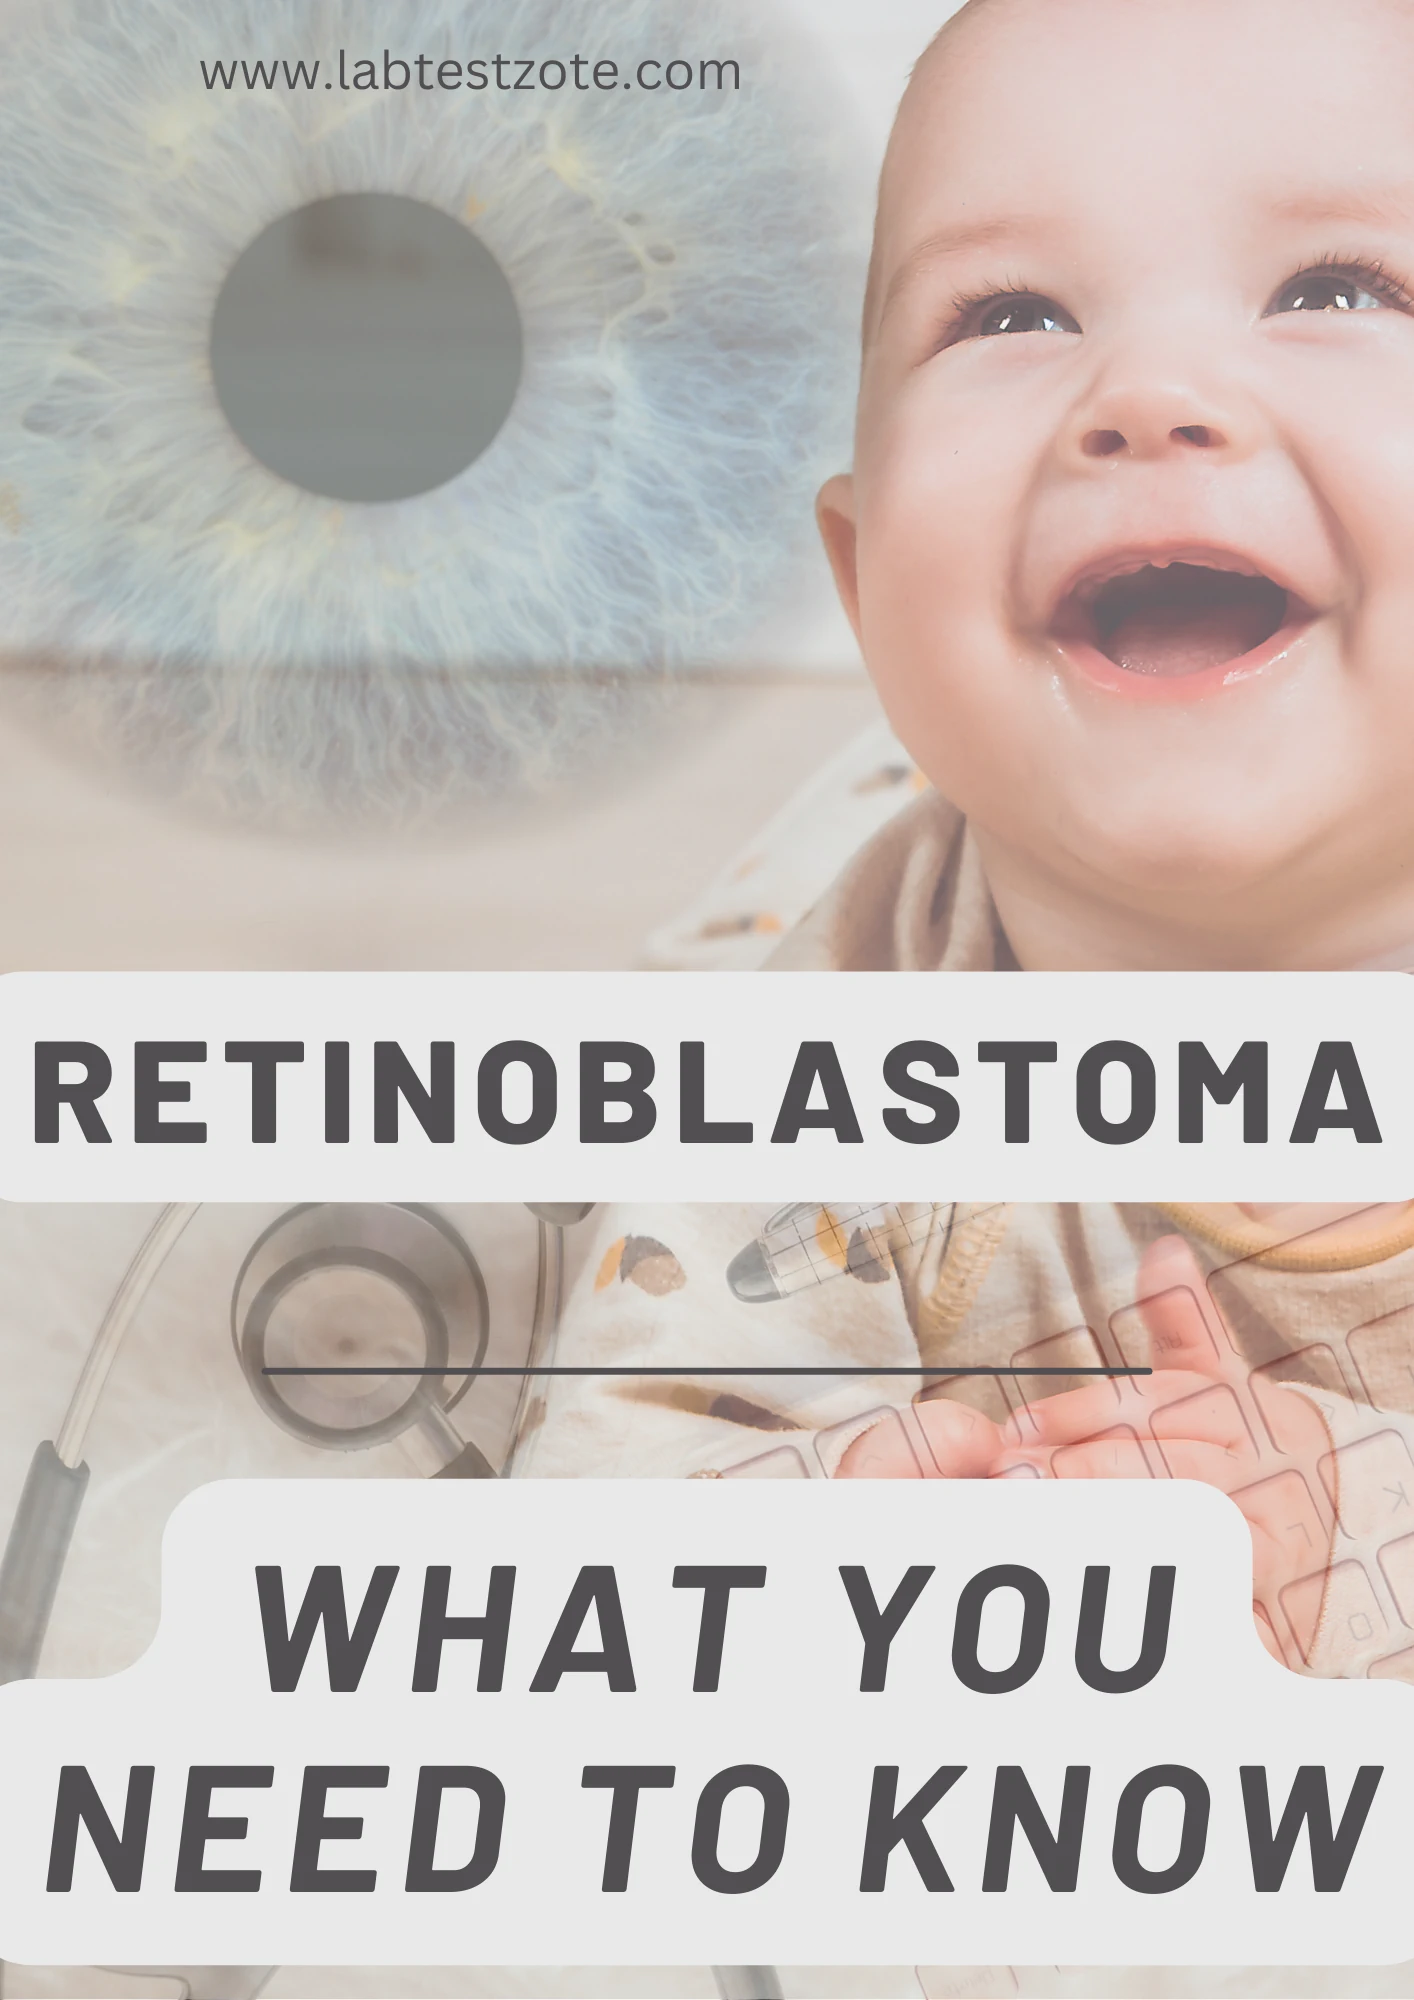 Retinoblastoma in Kenya : The Most Common Eye Cancer In Children